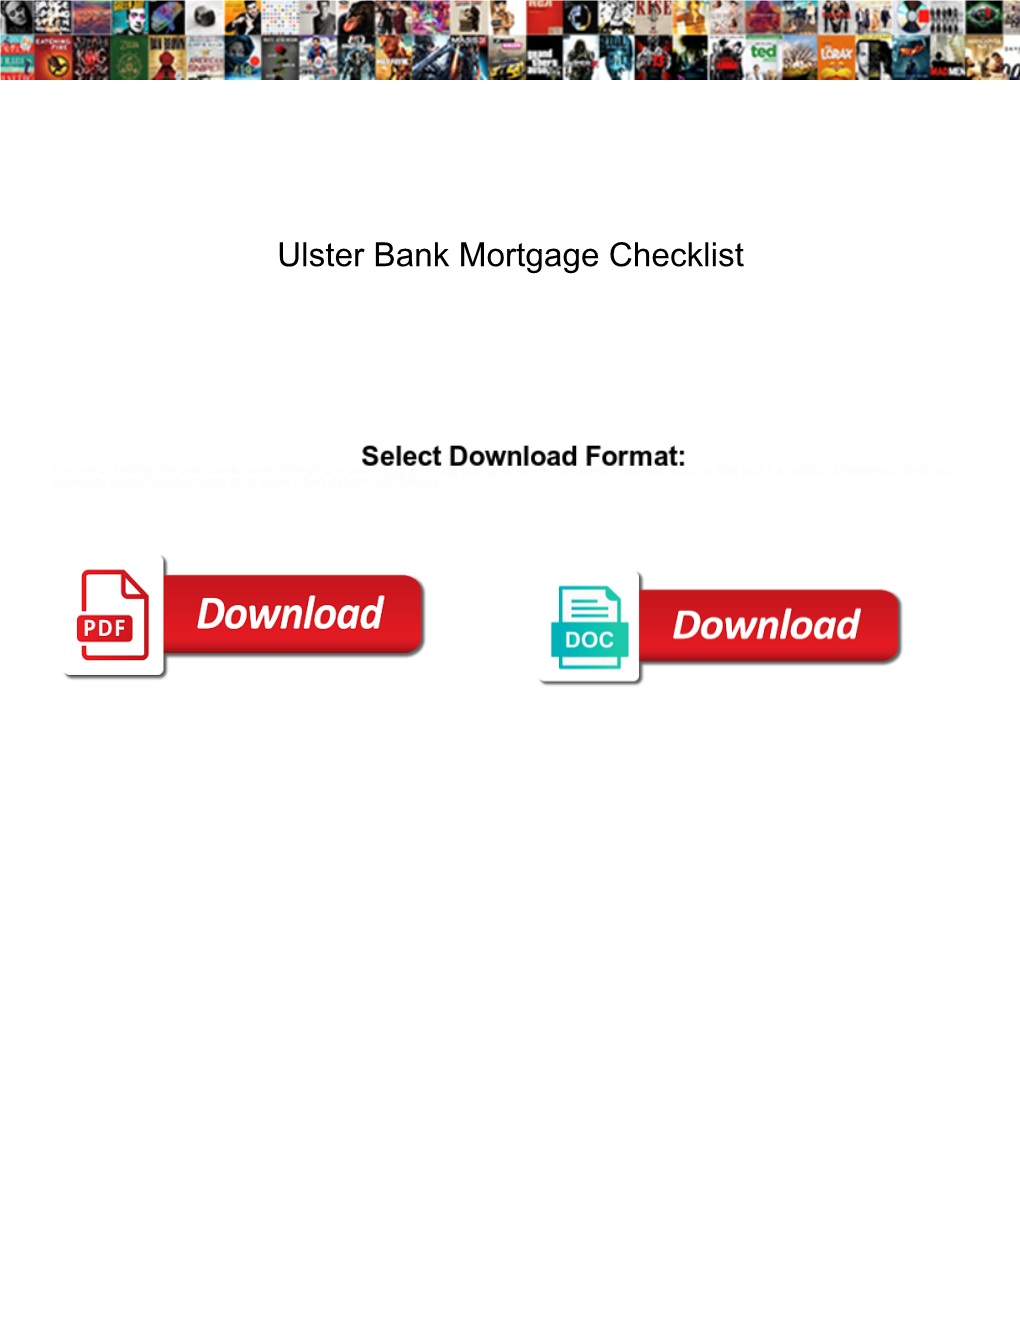 Ulster Bank Mortgage Checklist